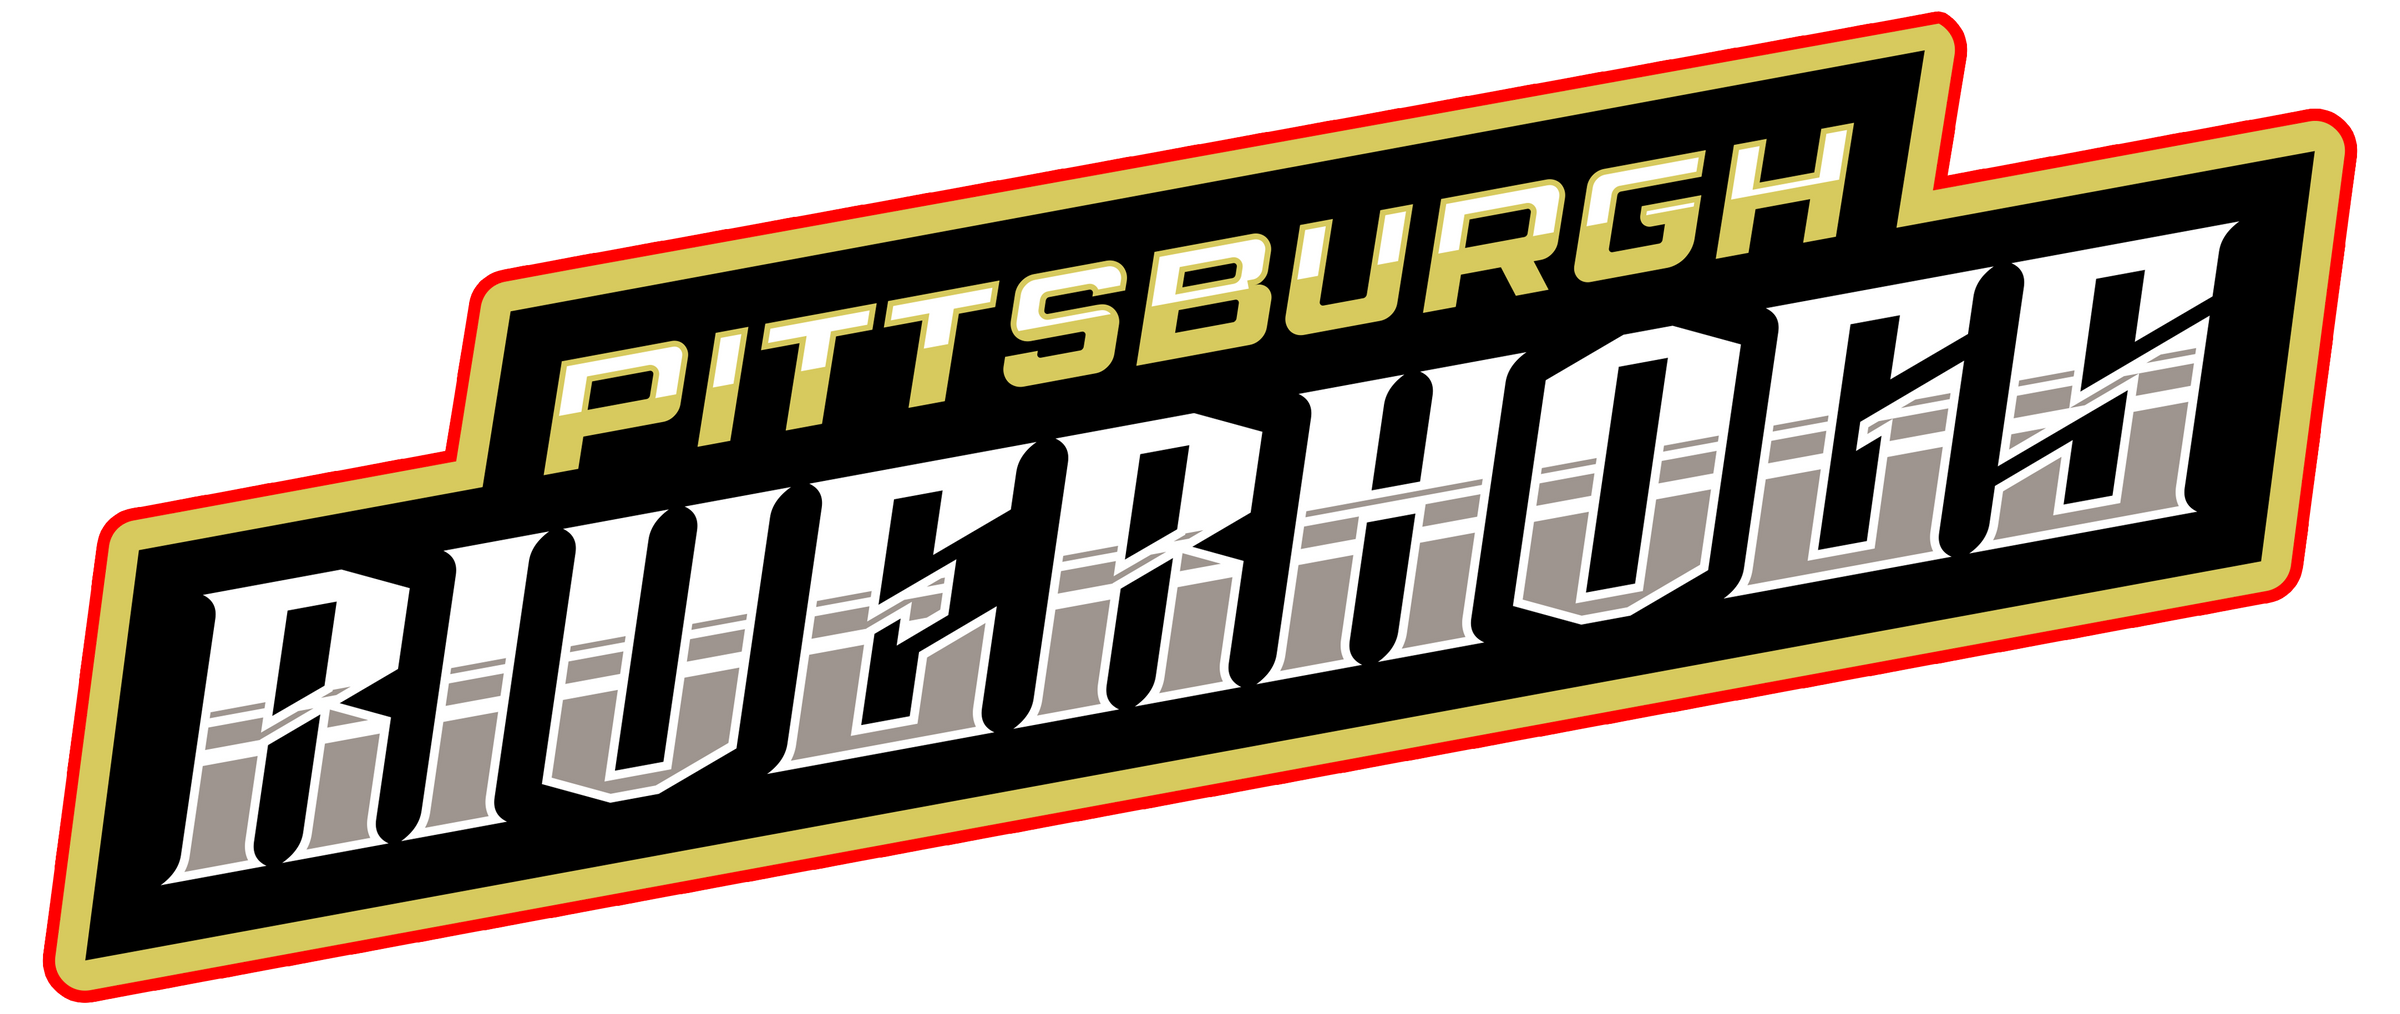 Pittsburgh Riverhogs